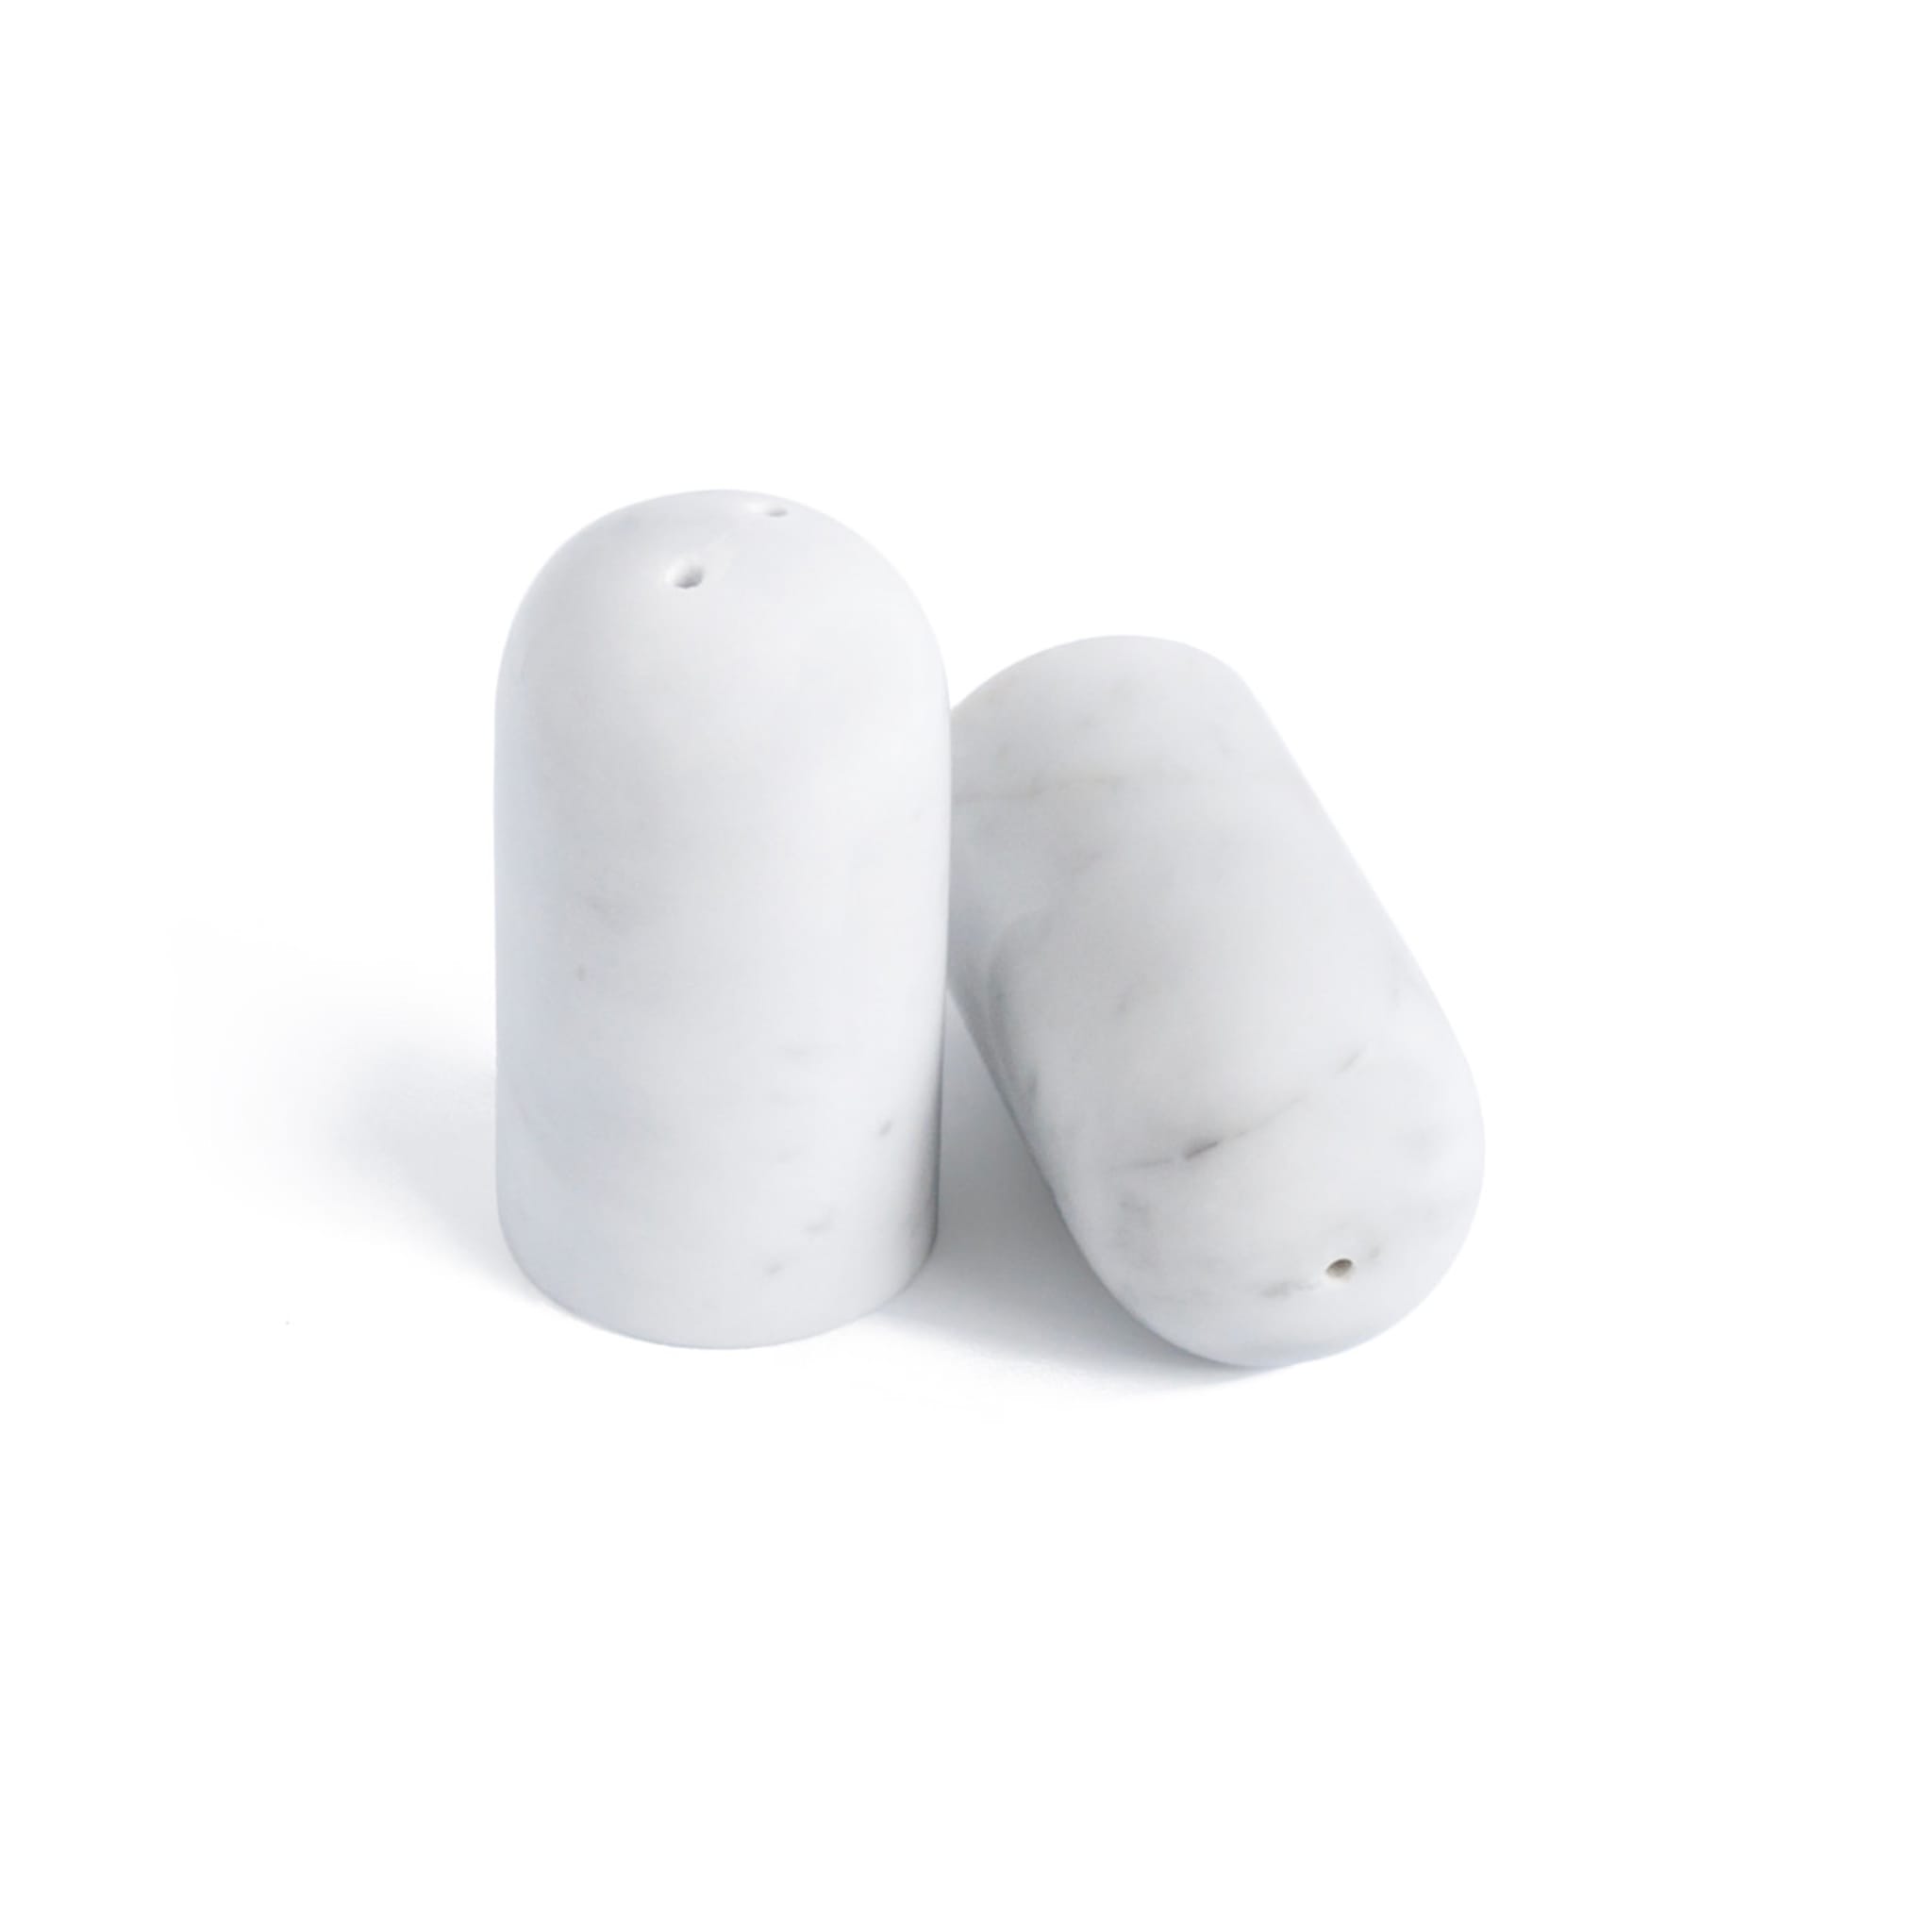 White Carrara Marble Salt and Pepper Shakers - Alternative view 1